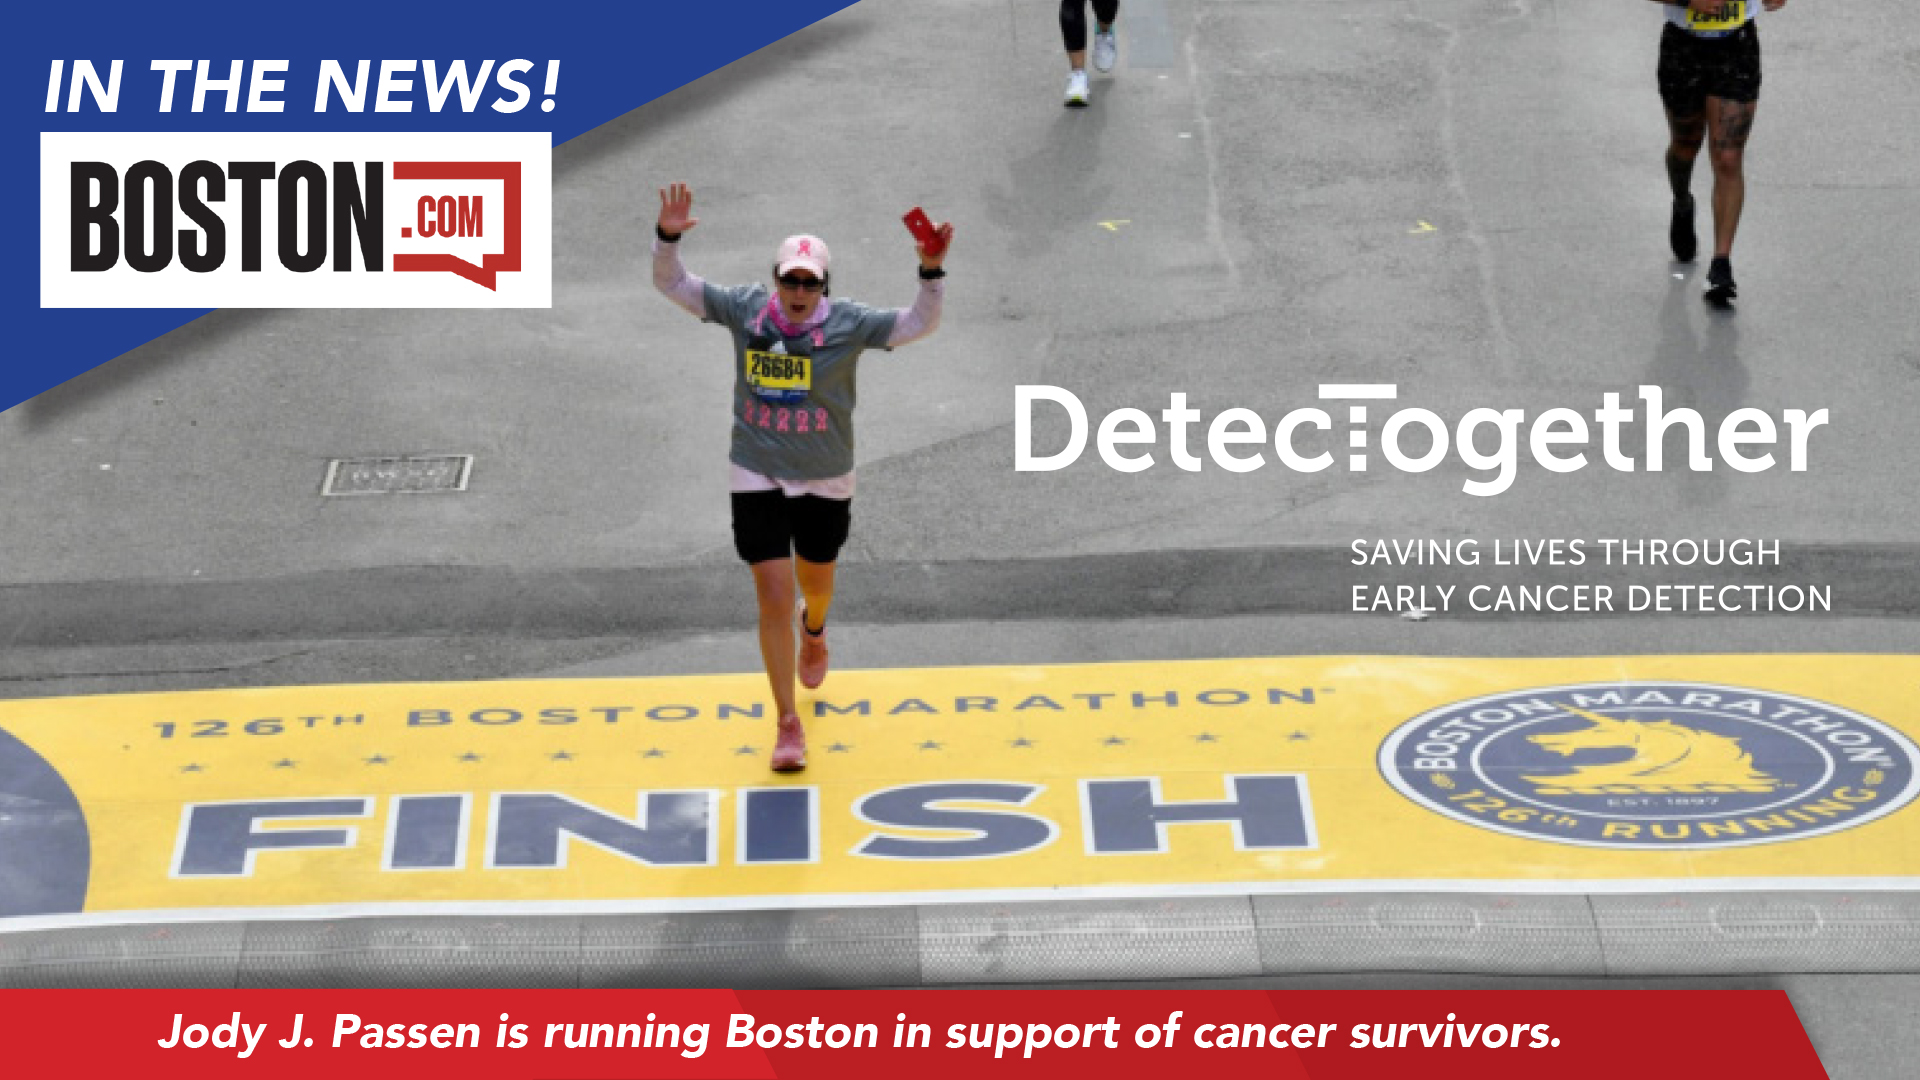 Jody Passen runs Boston Marathon for Detectogether